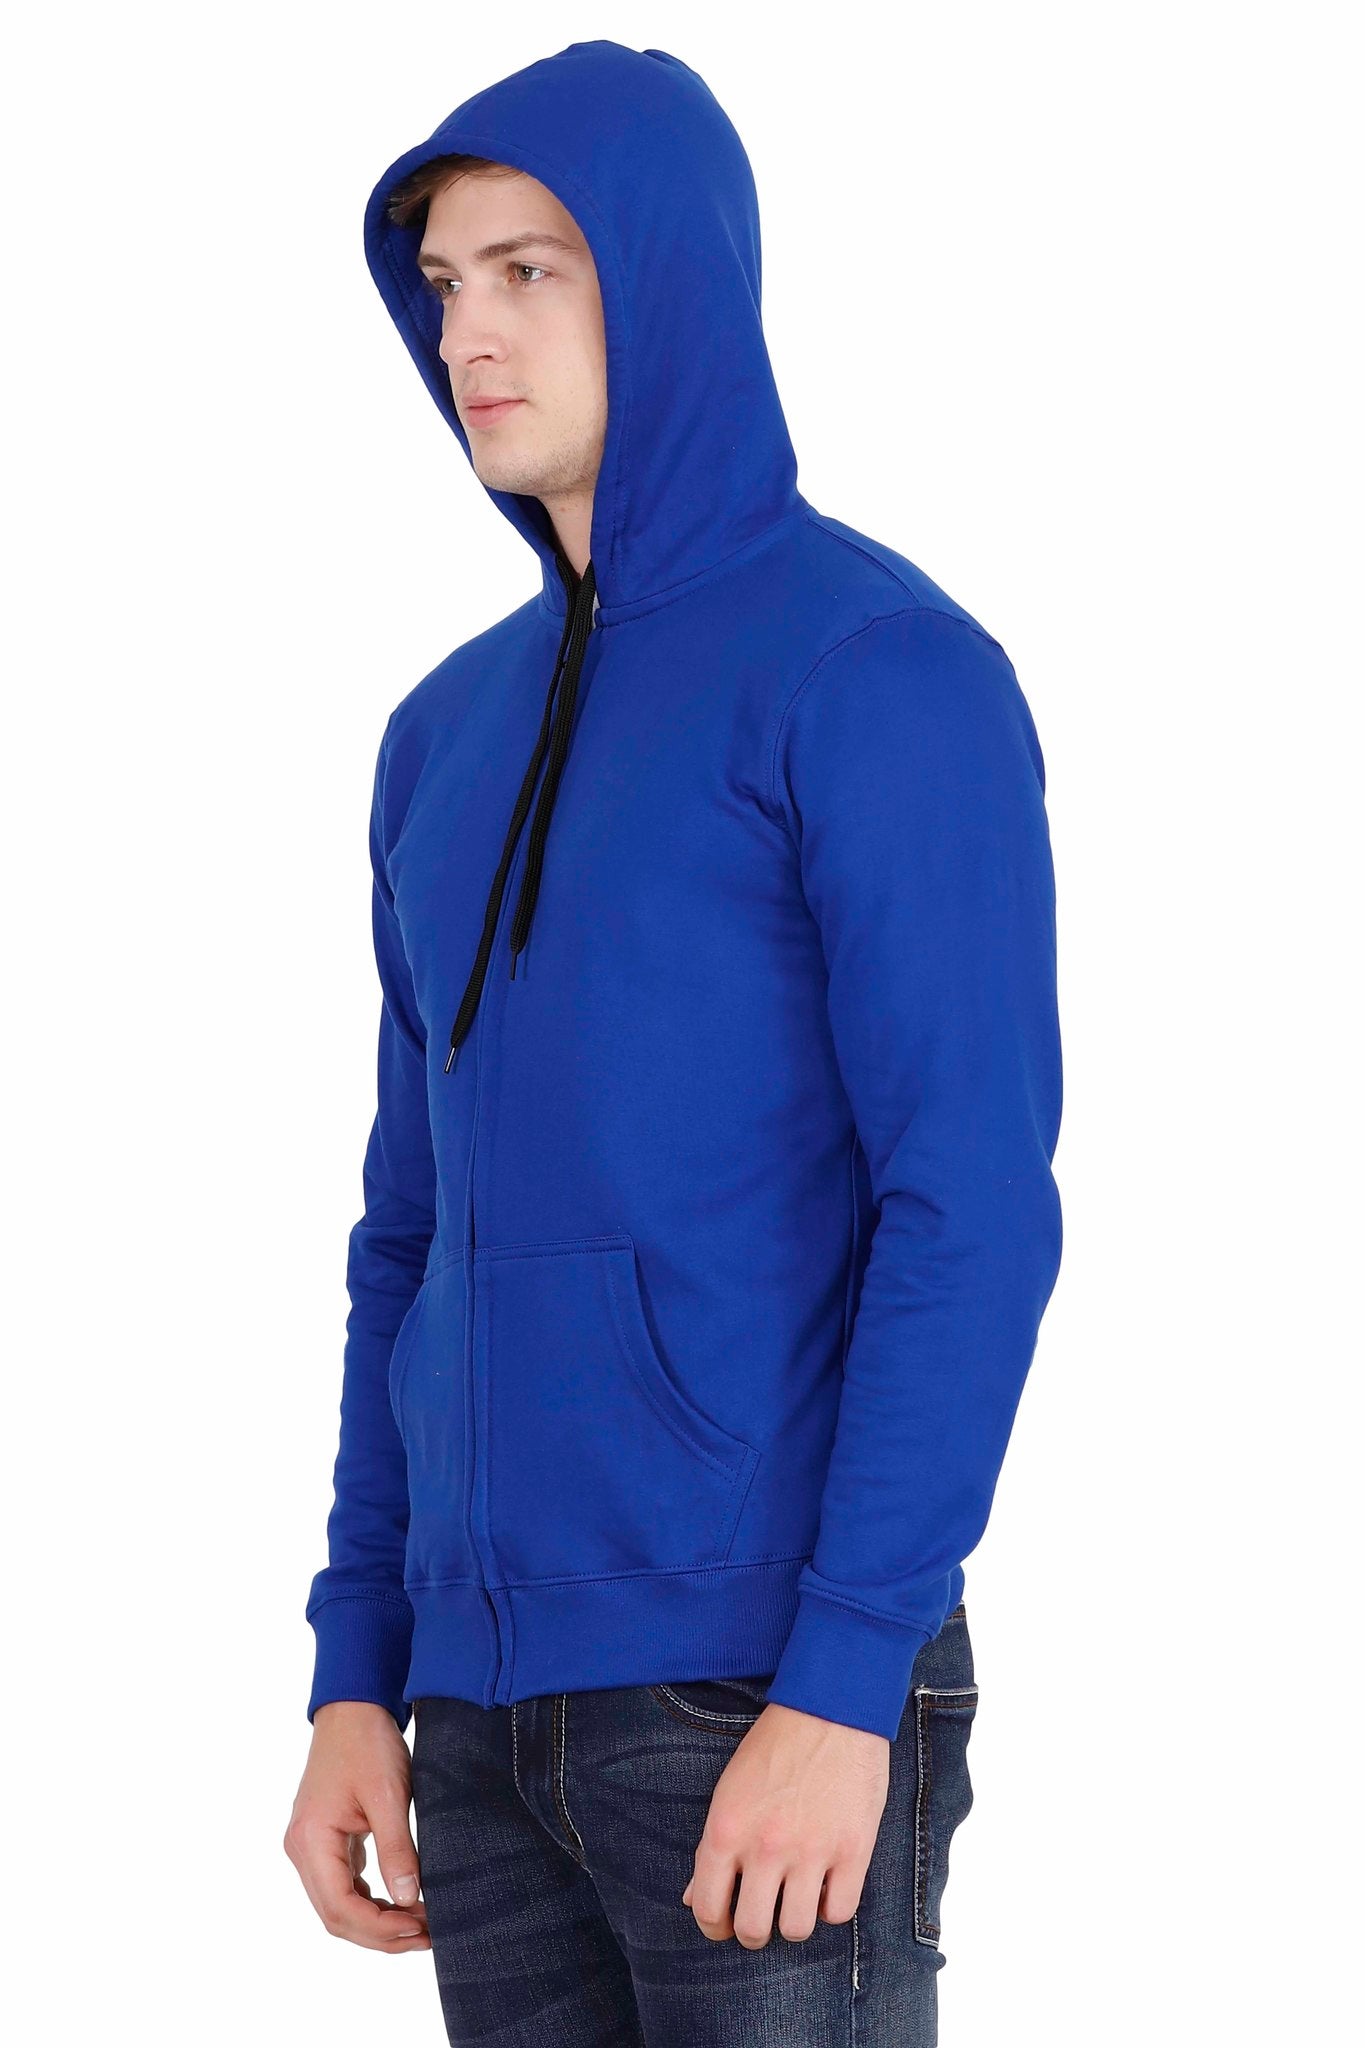 Men's Cotton Plain Full Sleeve Royal Blue Color Sweatshirt/Hoodies